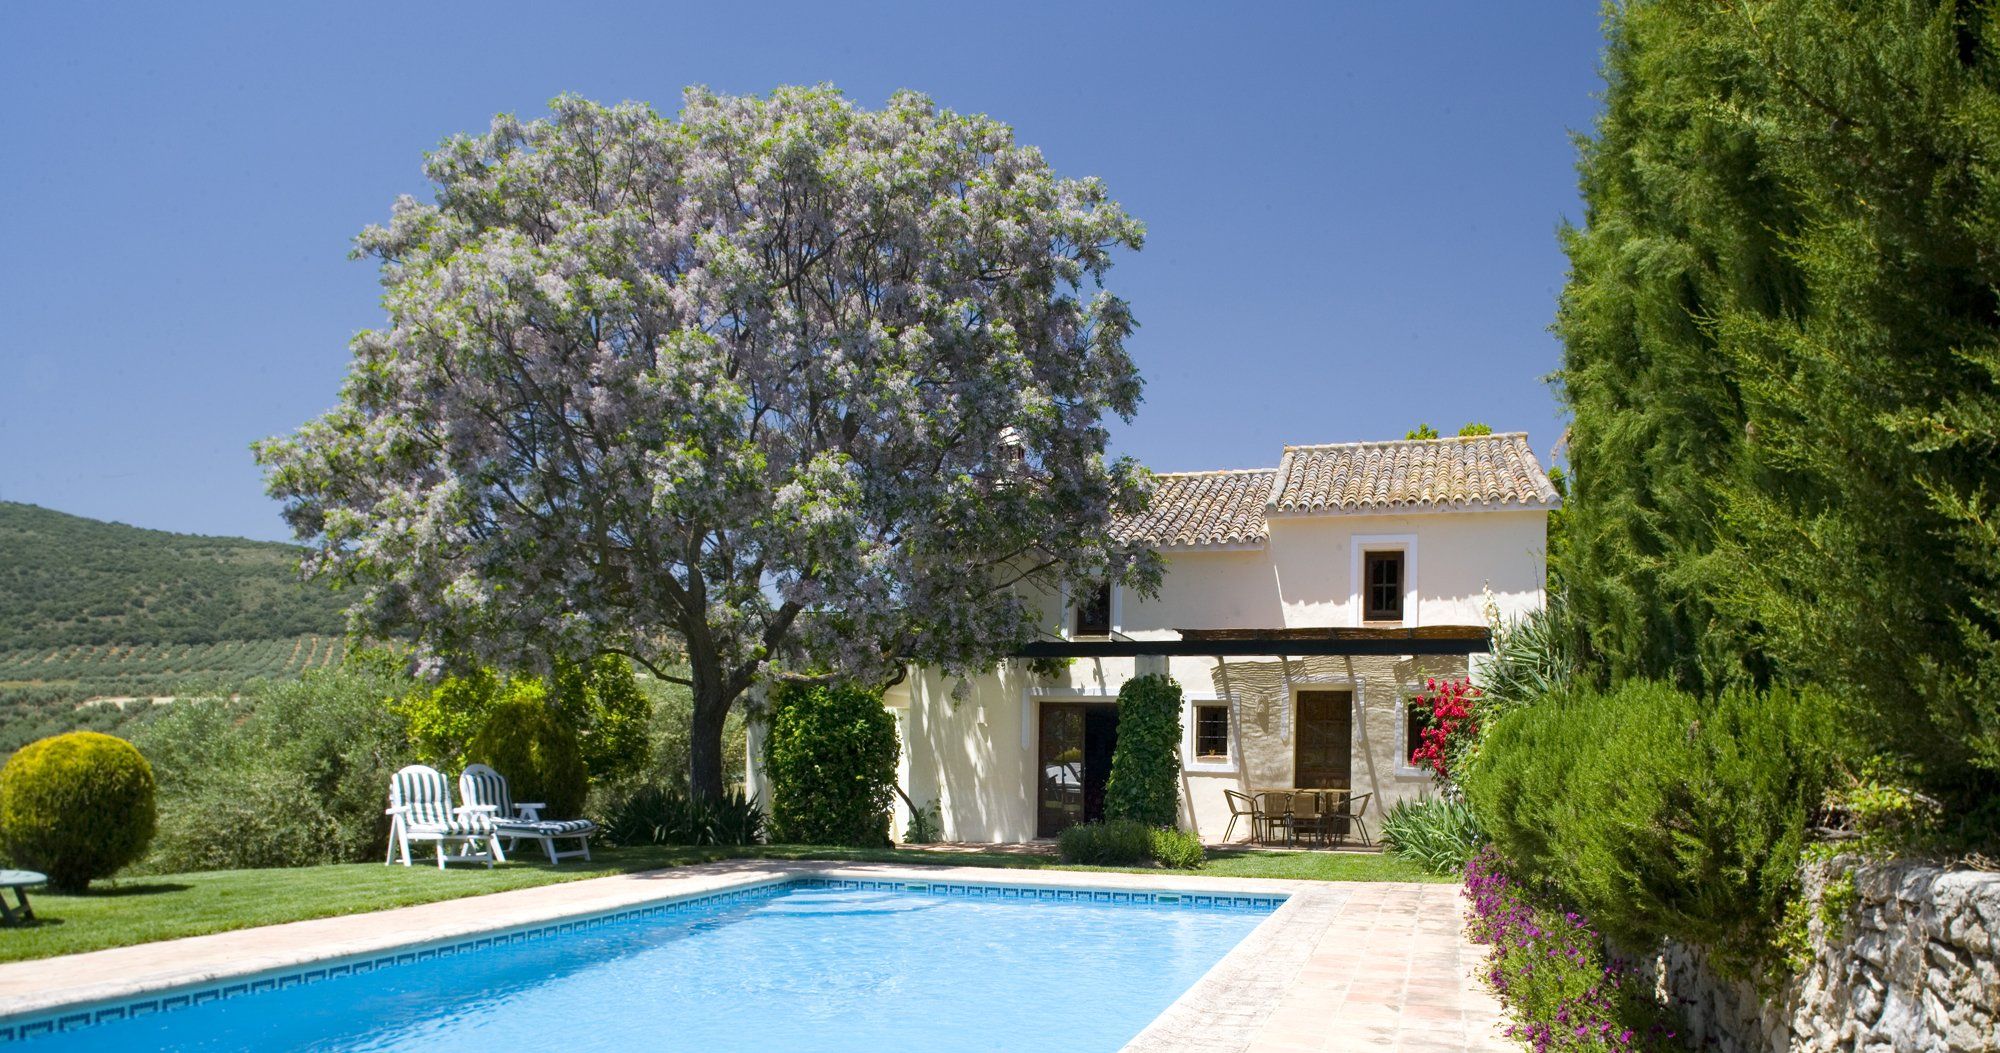 villa cottage ronda andalucia pool and facade